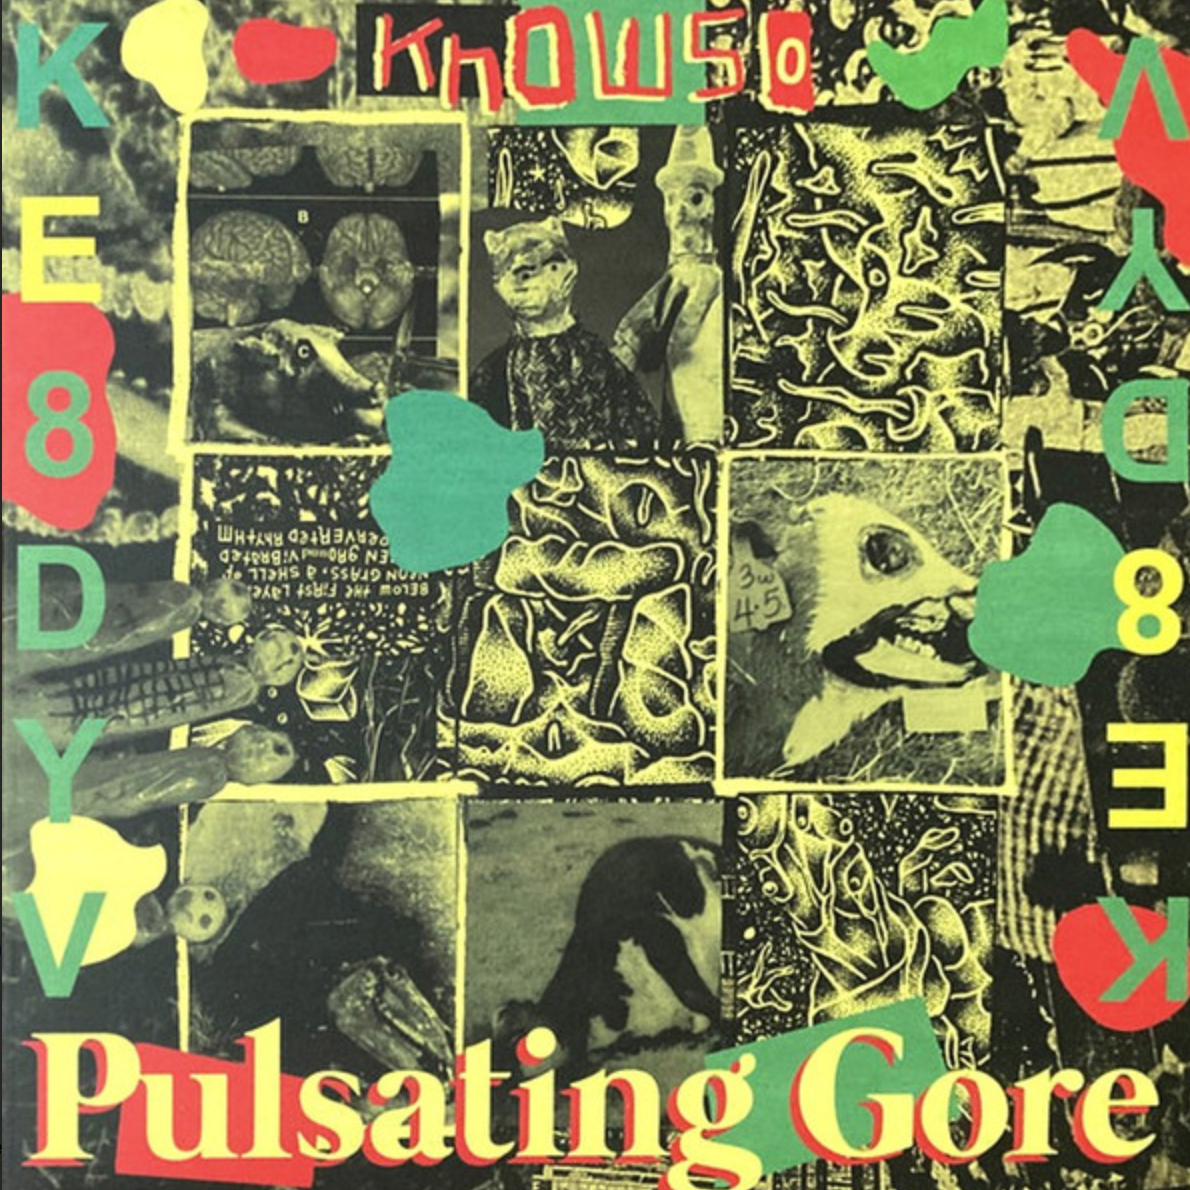 KNOWSO - PULSATING GORE Vinyl LP